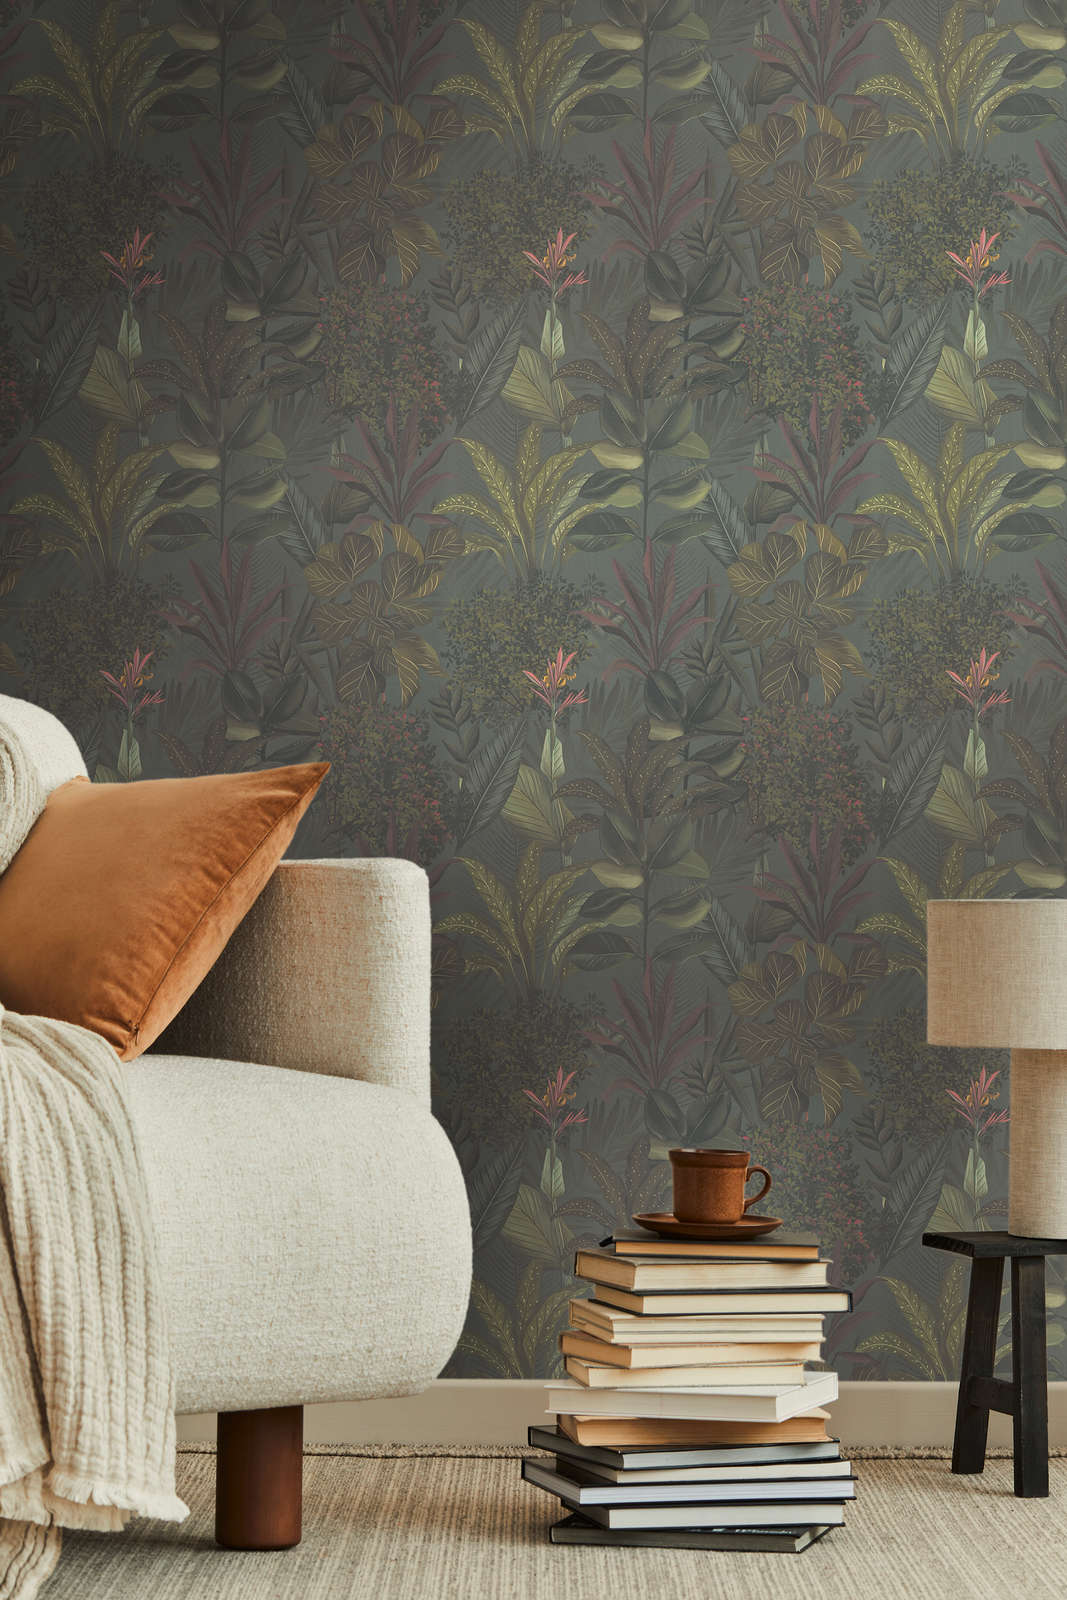             Floral wallpaper modern with leaves & grasses textured matt - dark green, bordeaux
        